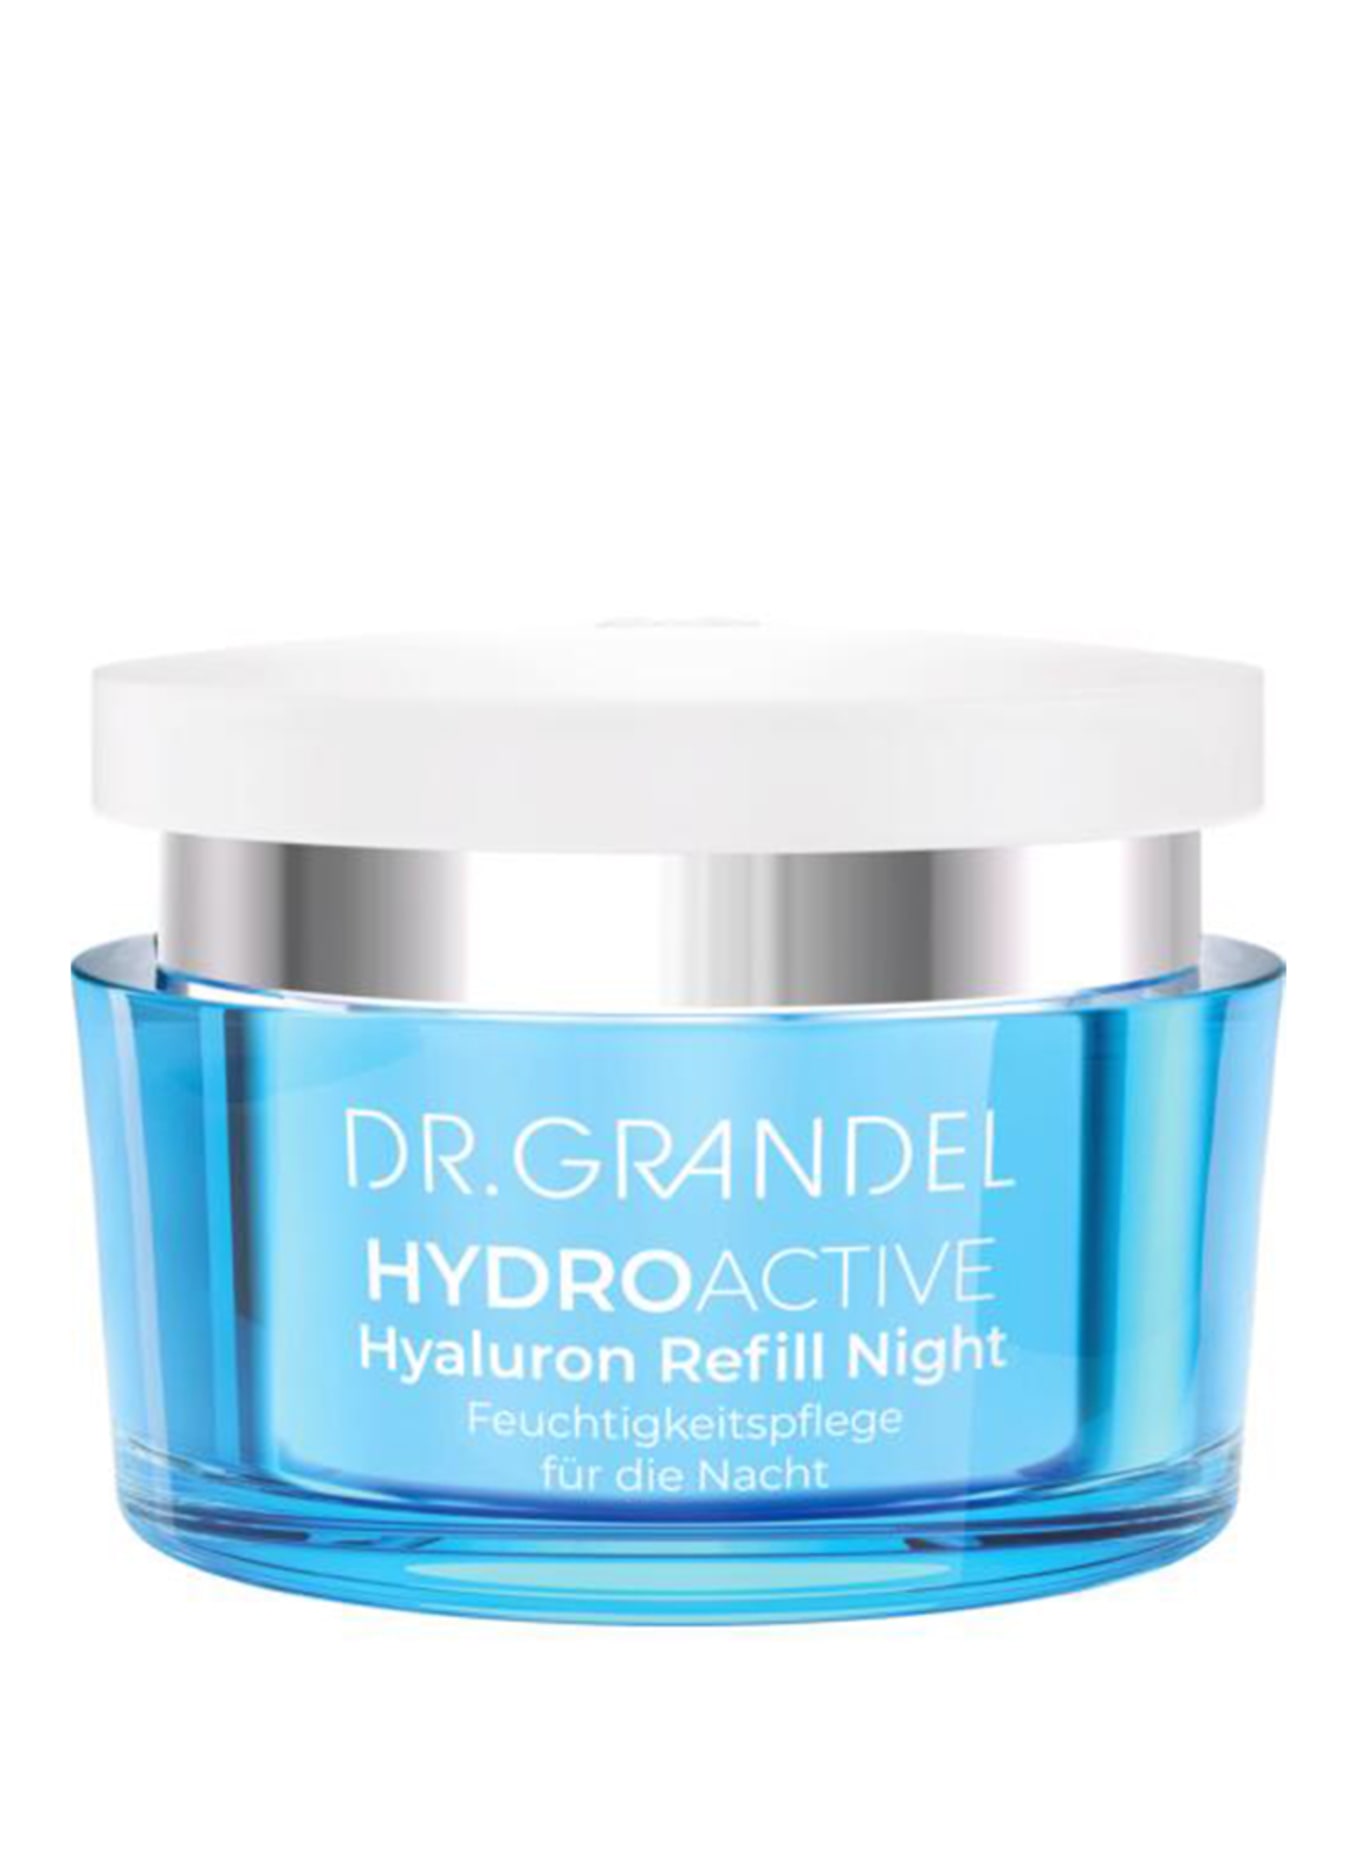 DR. GRANDEL HYDRO ACTIVE - HYALURON REFILL NIGHT (Obrázek 1)